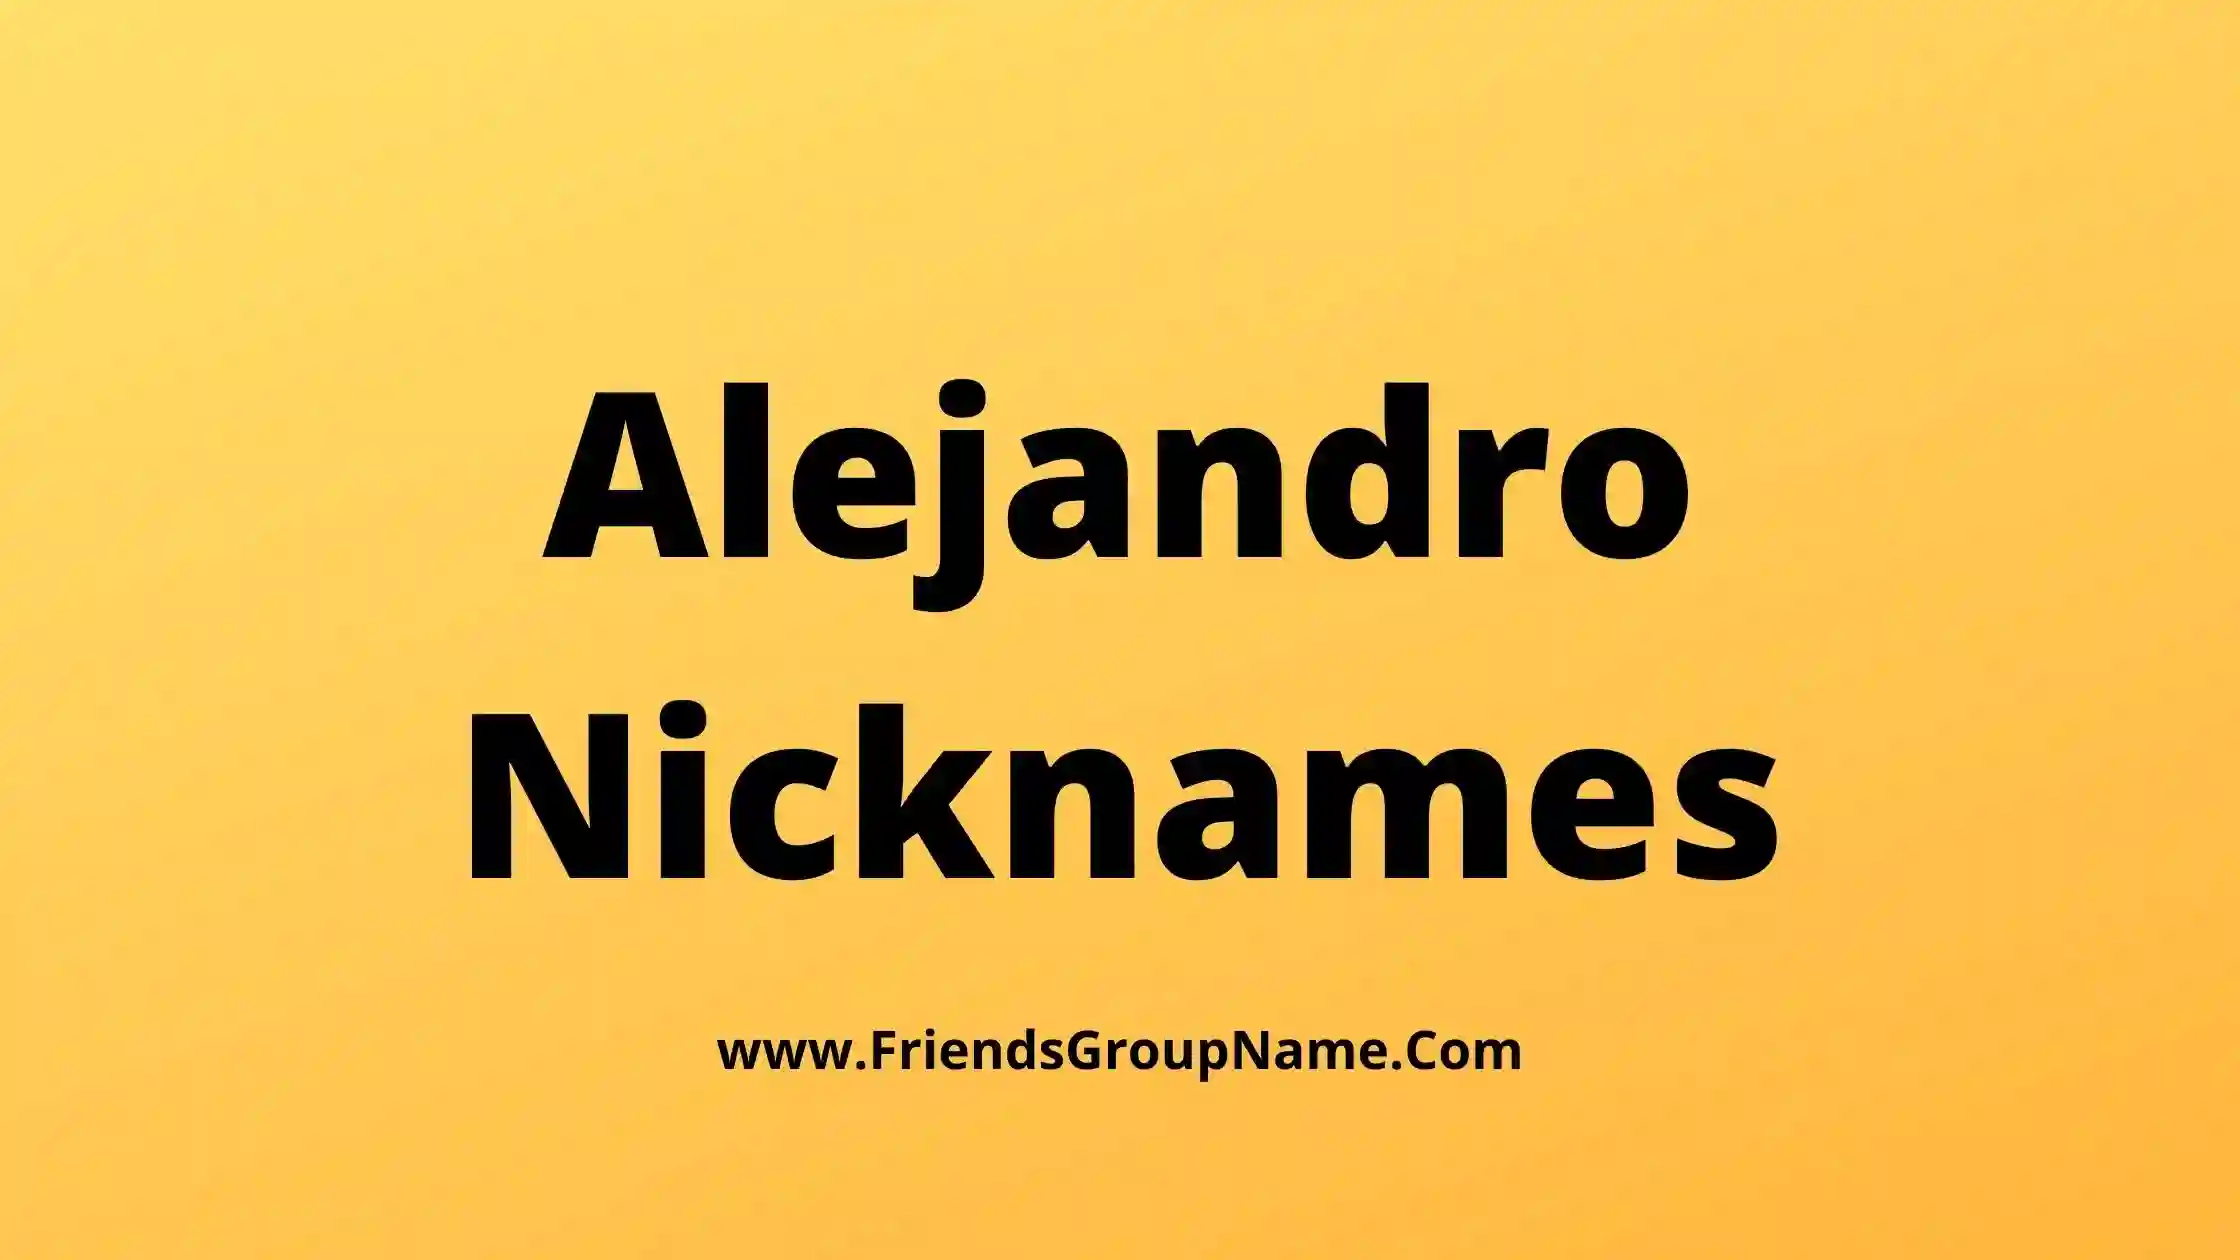 Alejandro Nicknames